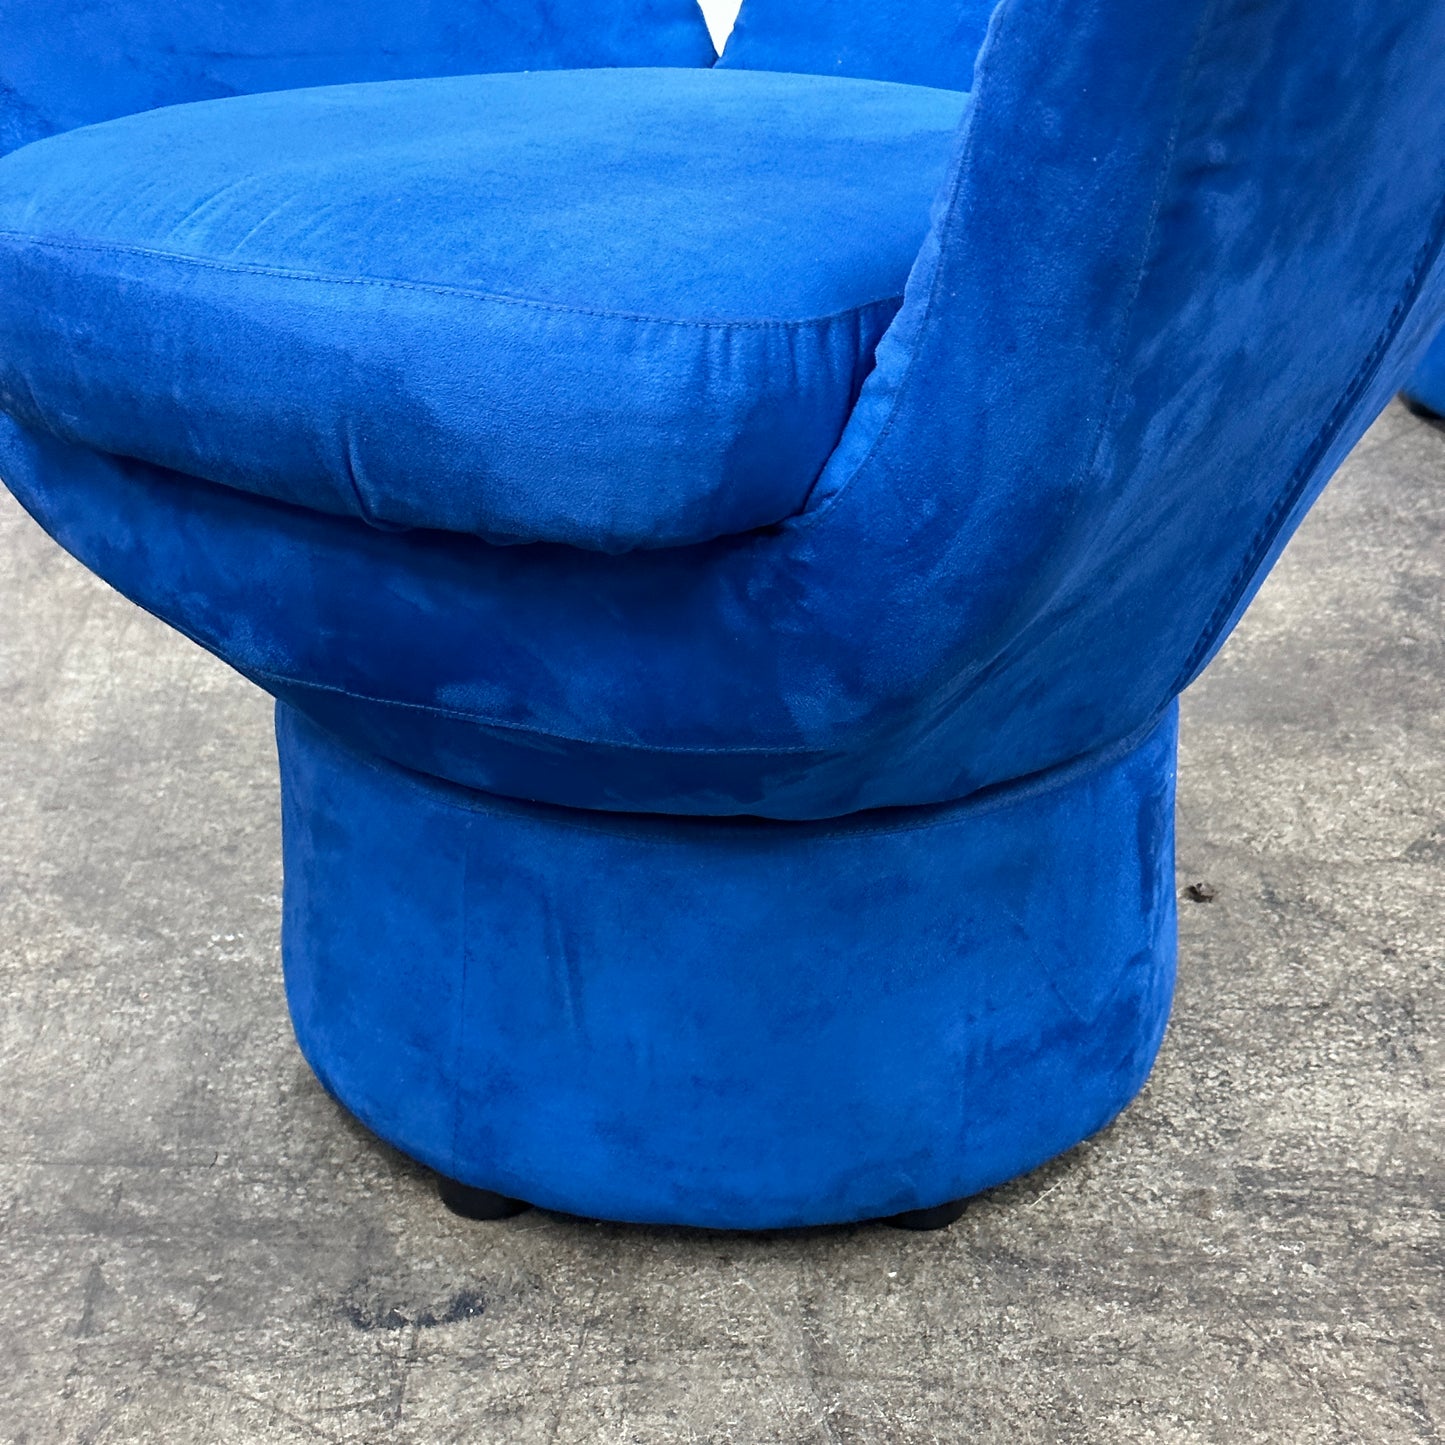 Postmodern Flower Lounge Chairs